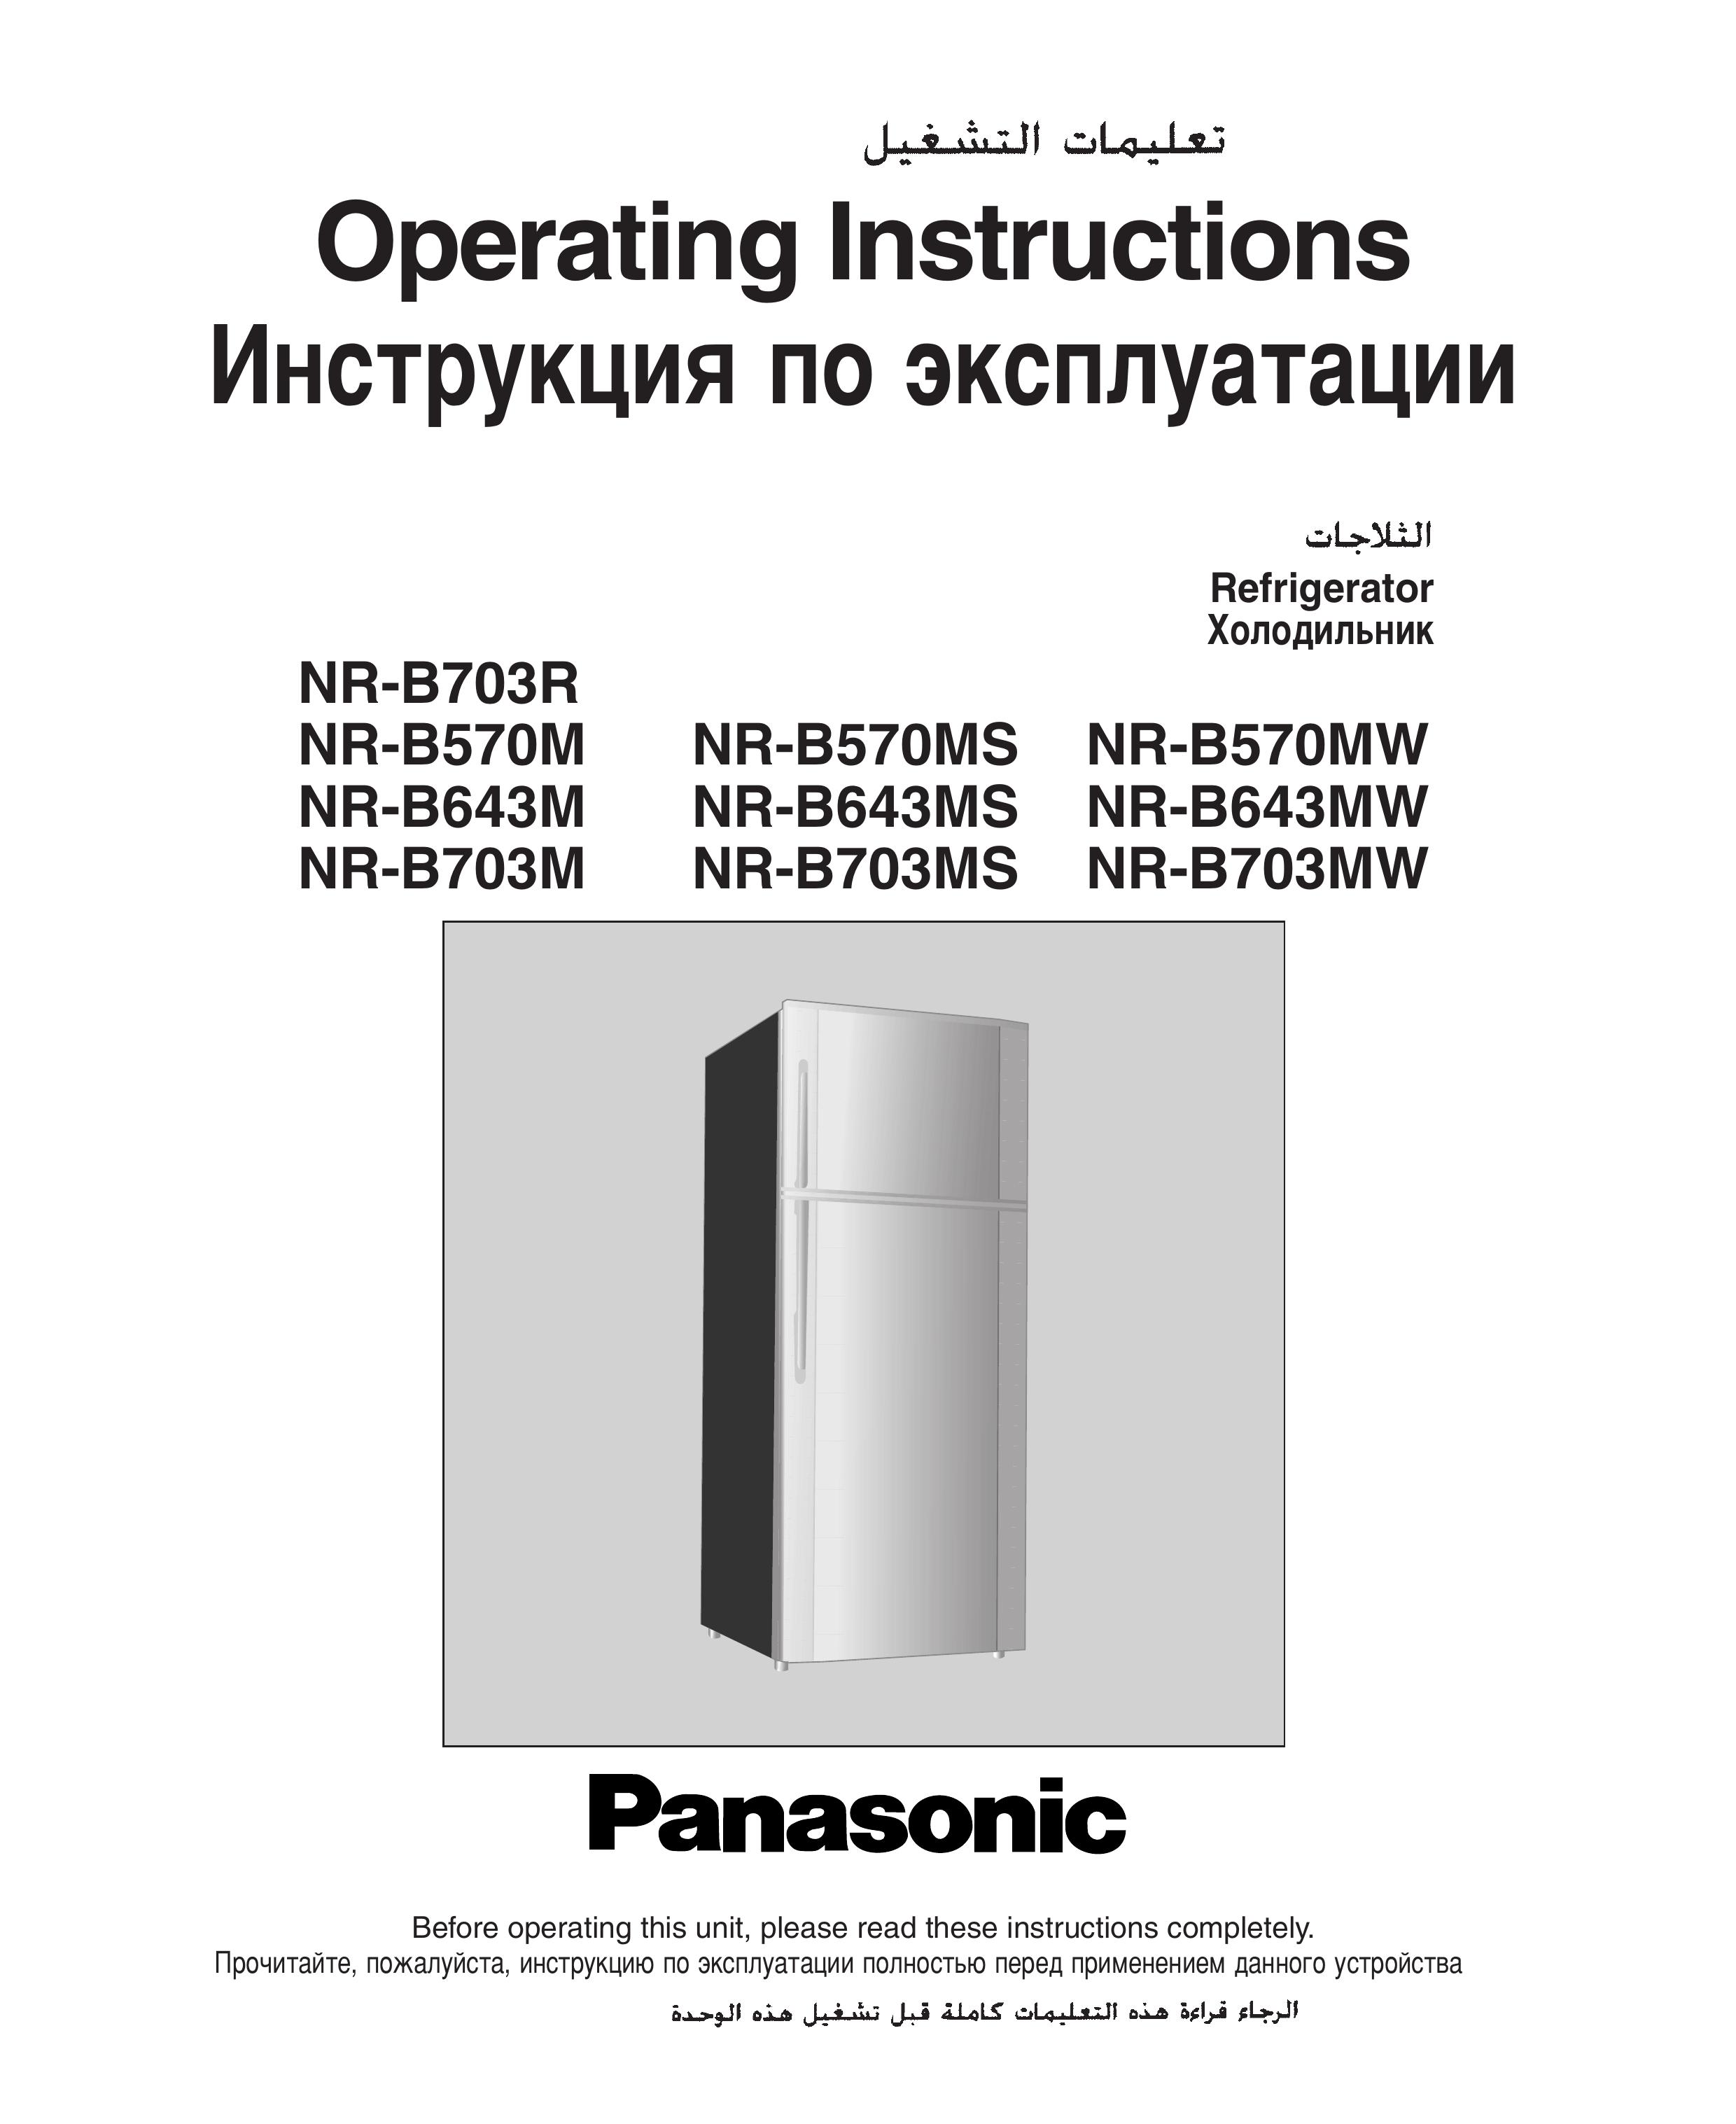 Panasonic NR-B703M Refrigerator User Manual